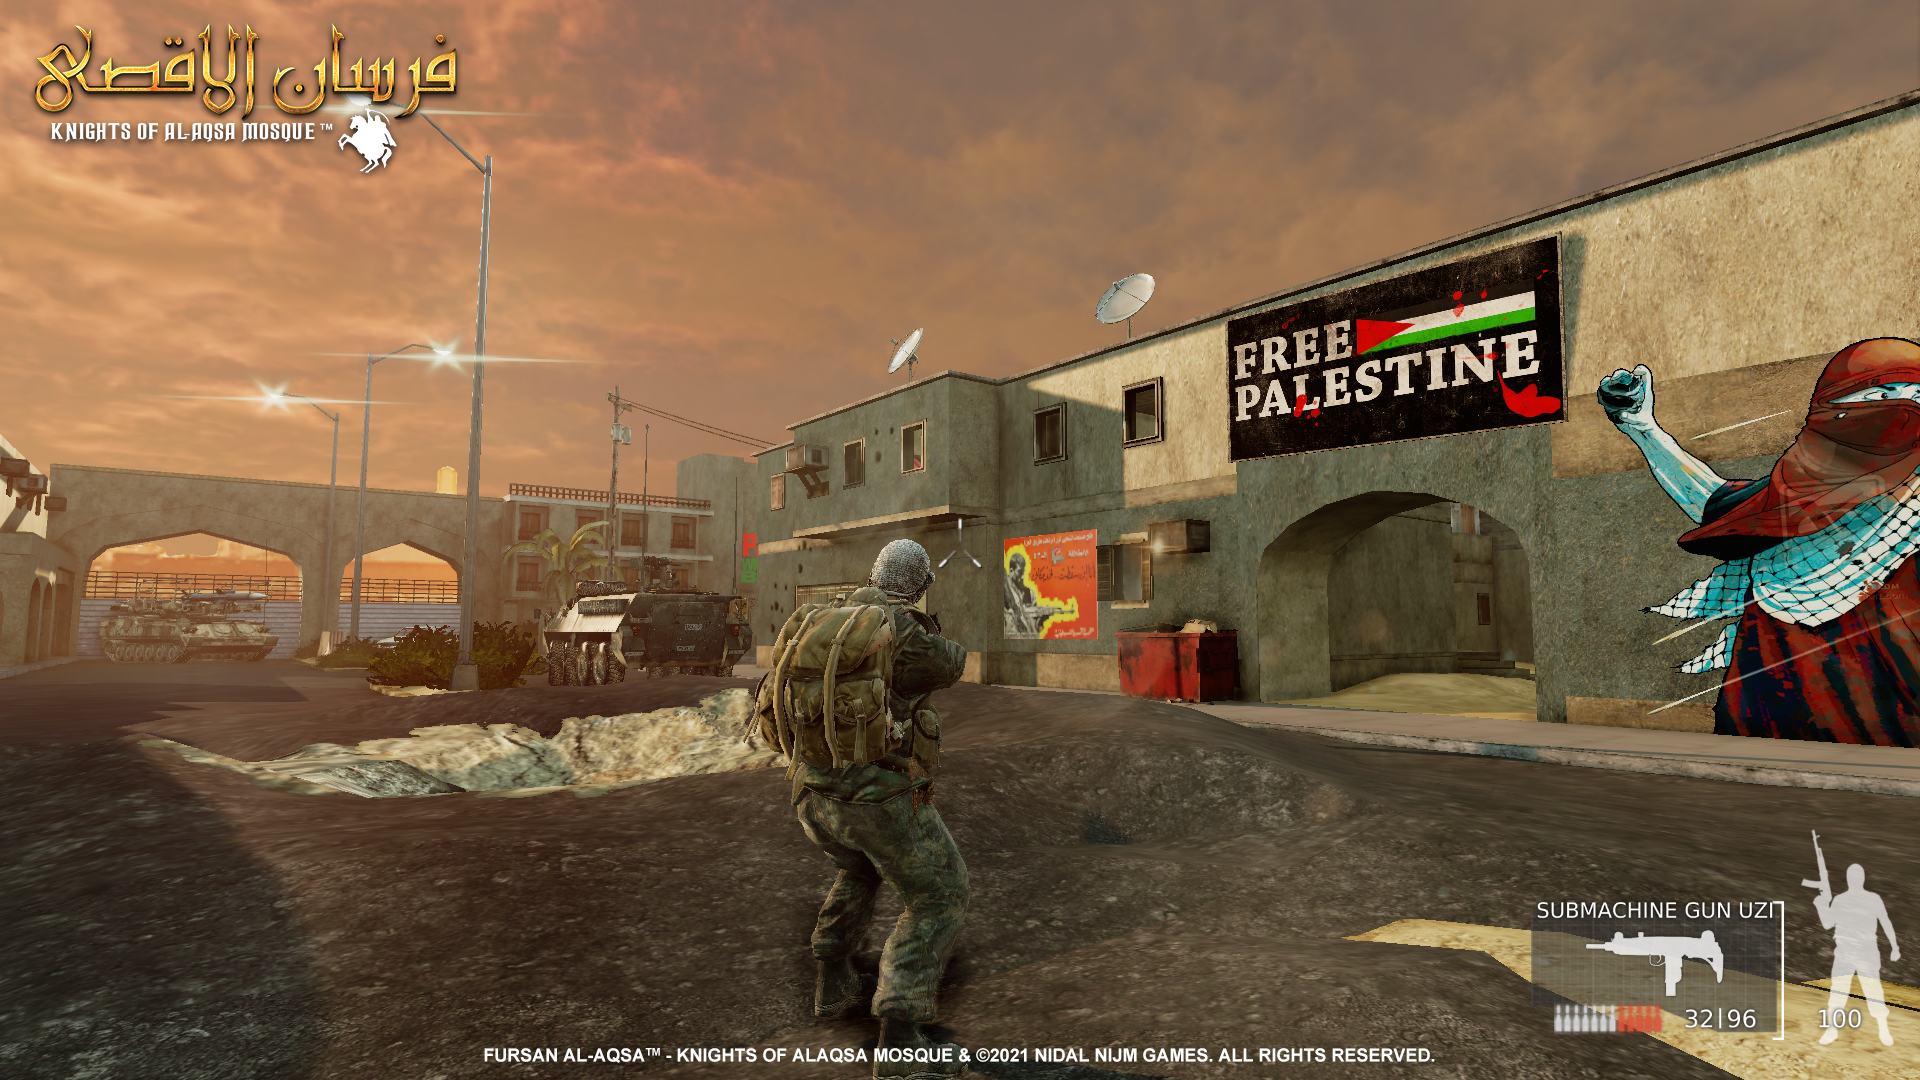 Fursan alAqsa  Showcase Gaza Shujayyiah  1 - I am developing a game about Palestine Resistance